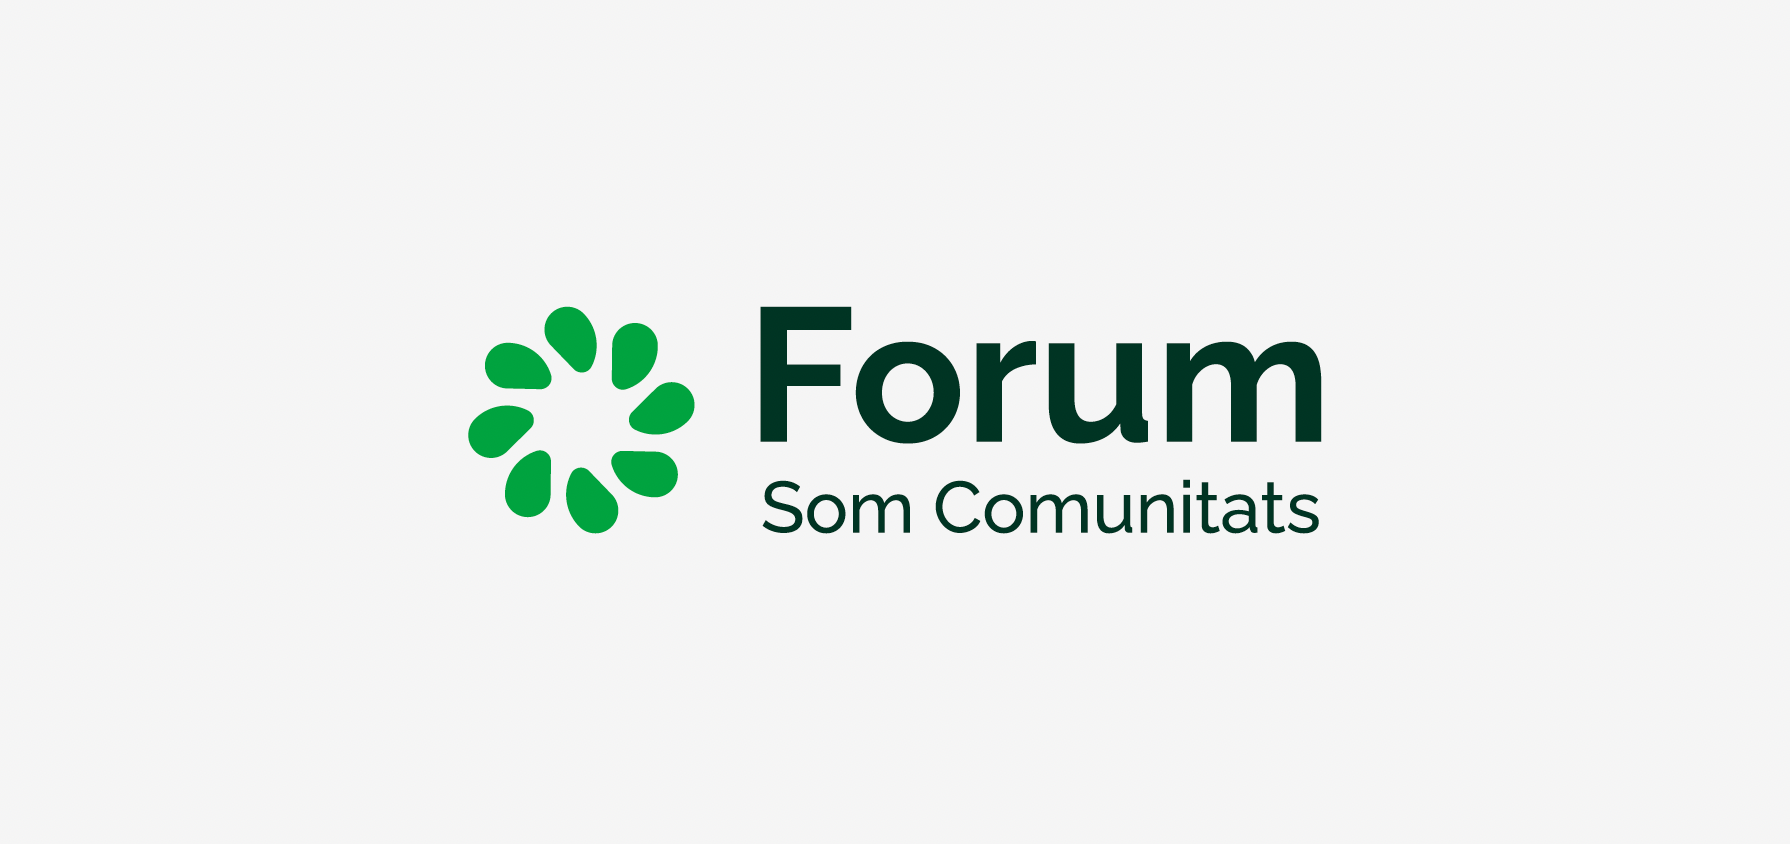 Presentamos el Forum para Comunidades Energéticas